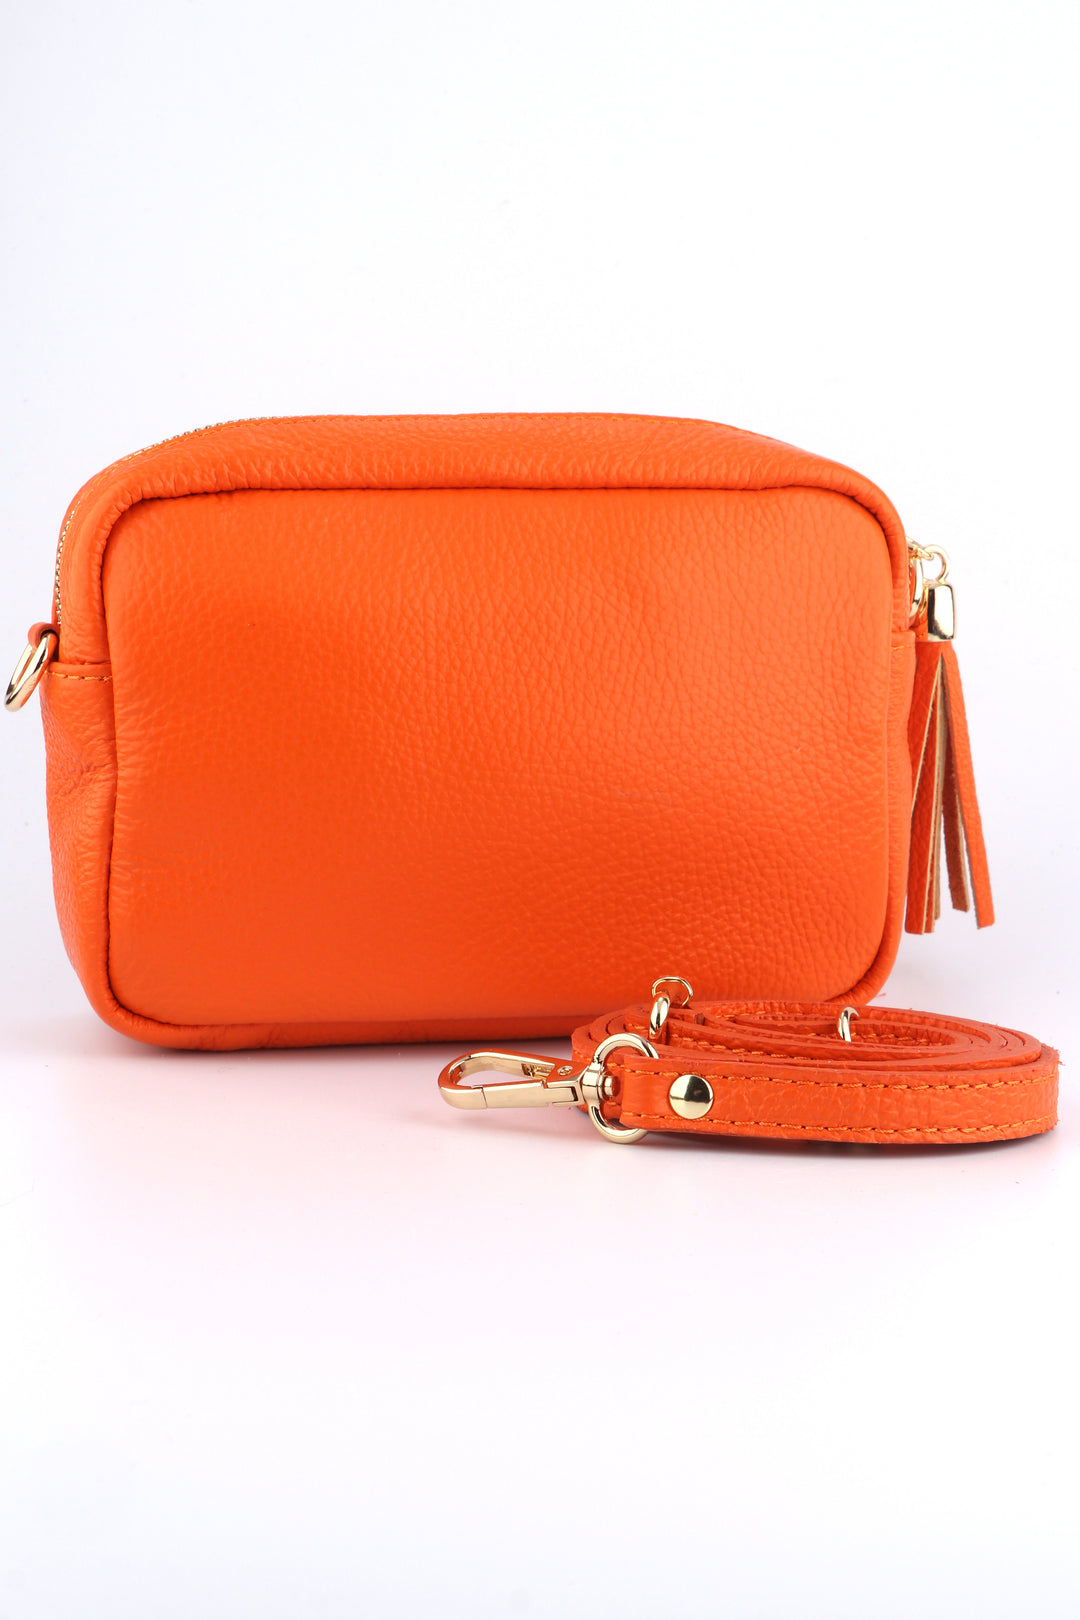 orange leather crossbody camera bag